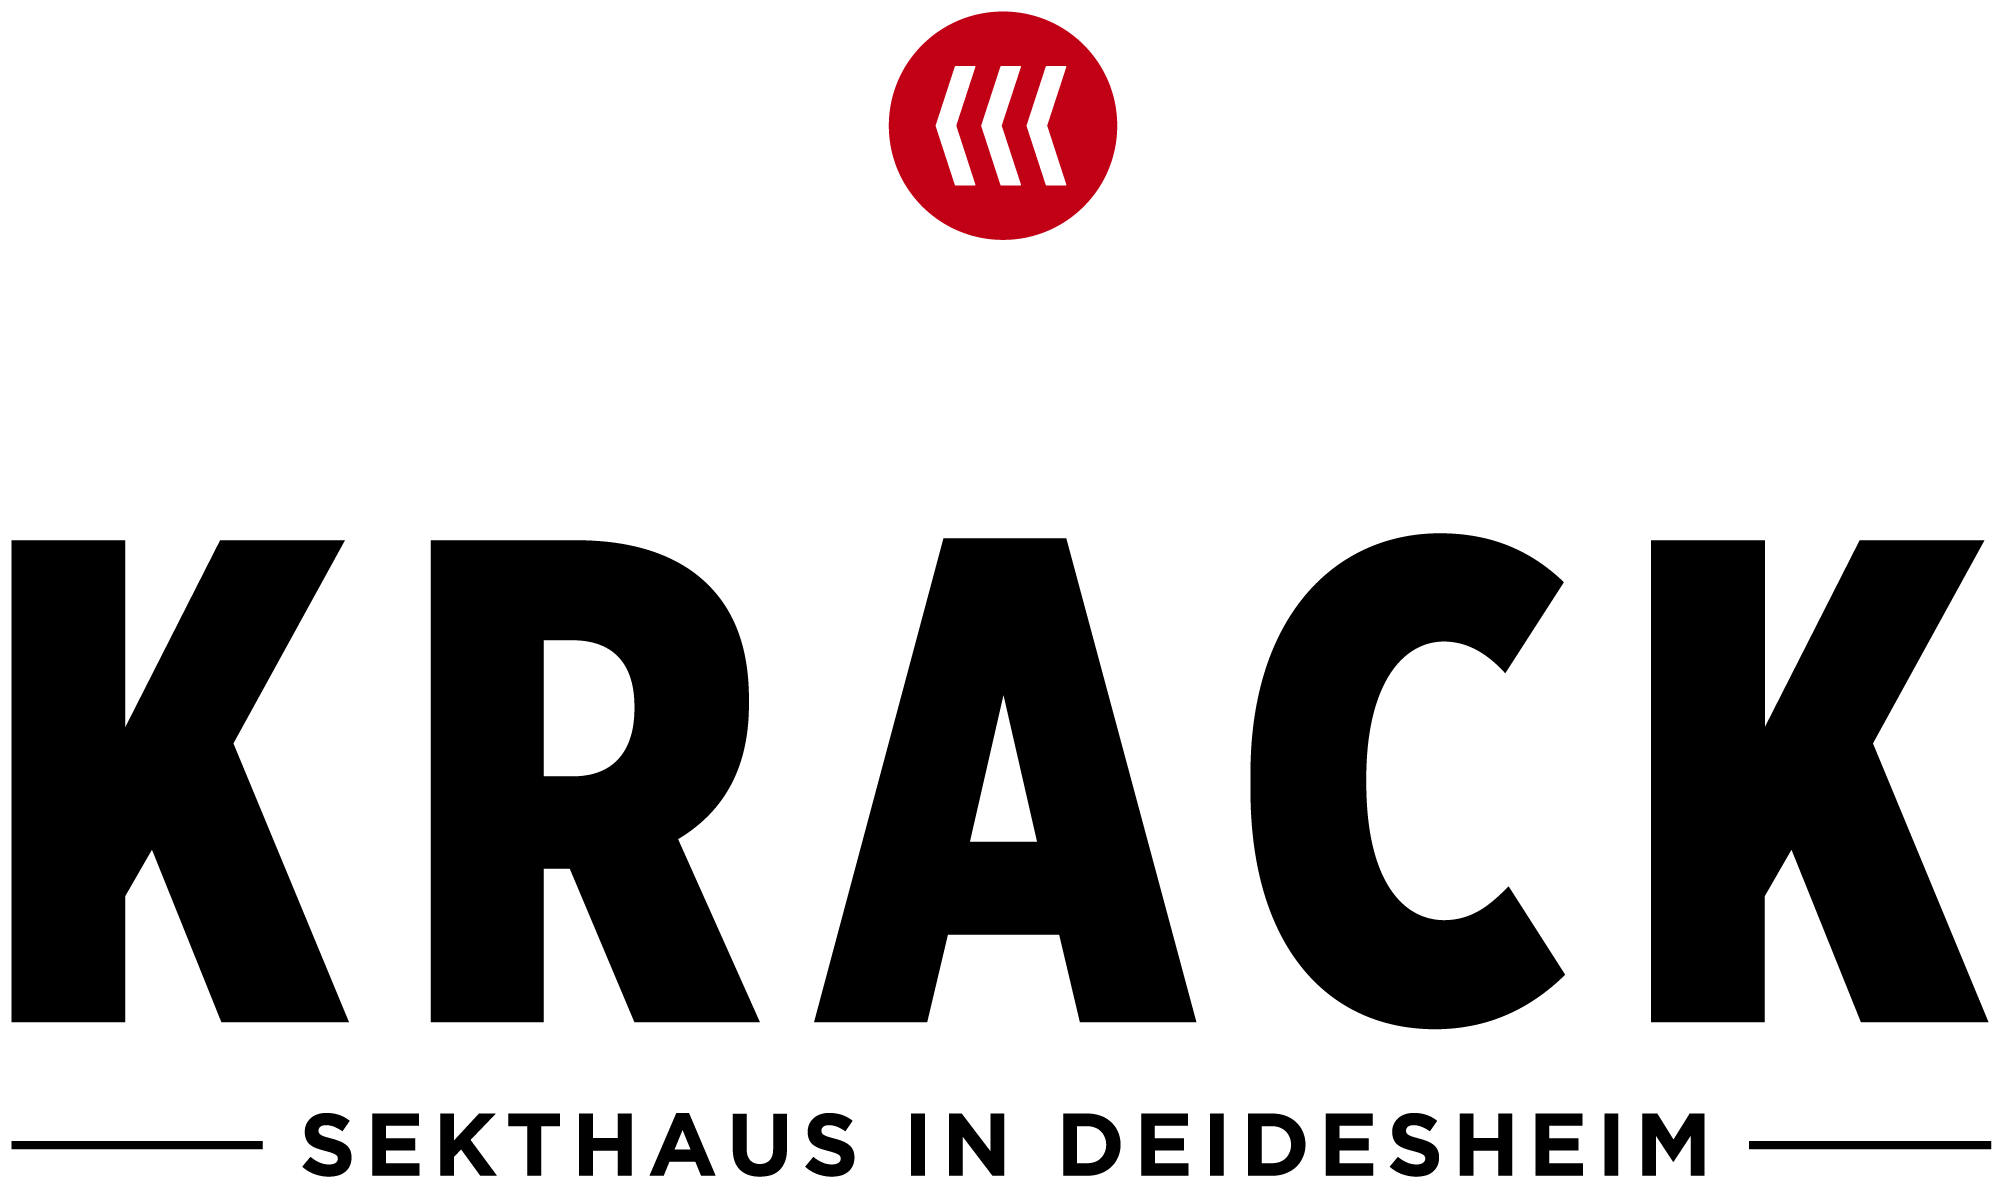 Sekthaus Krack